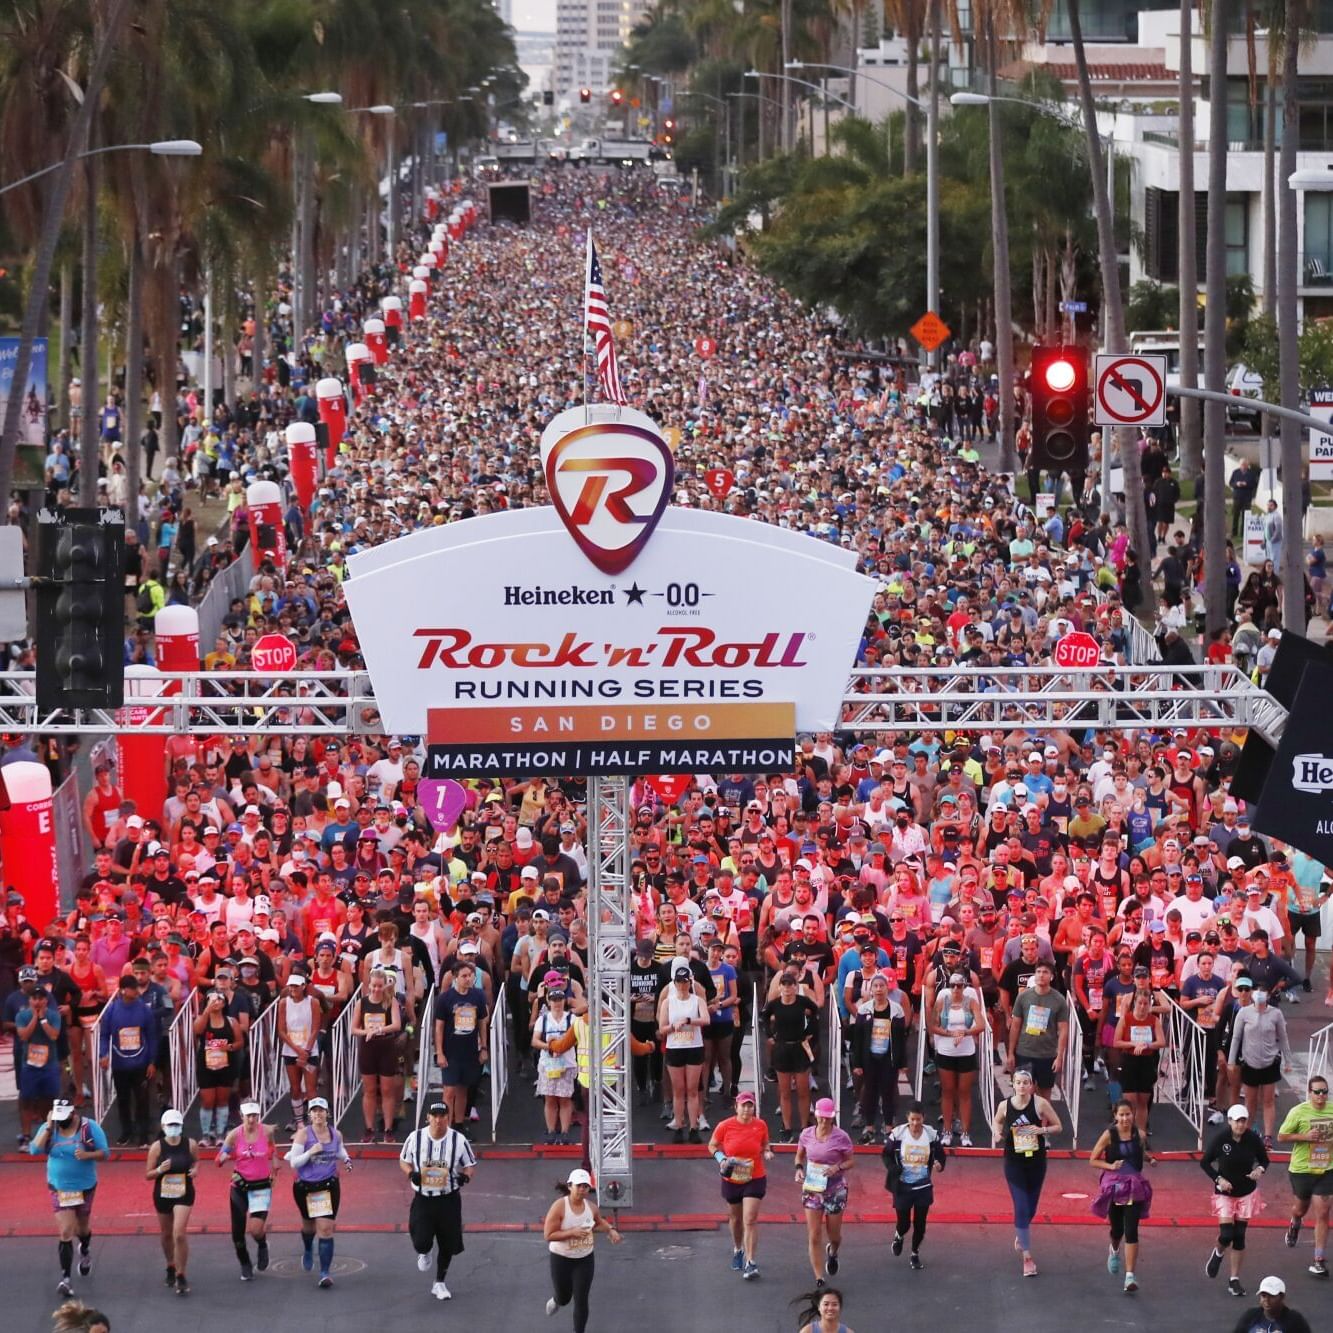 Rock 'n' Roll Running Series | San Diego Marathon Events | El Cordova Hotel